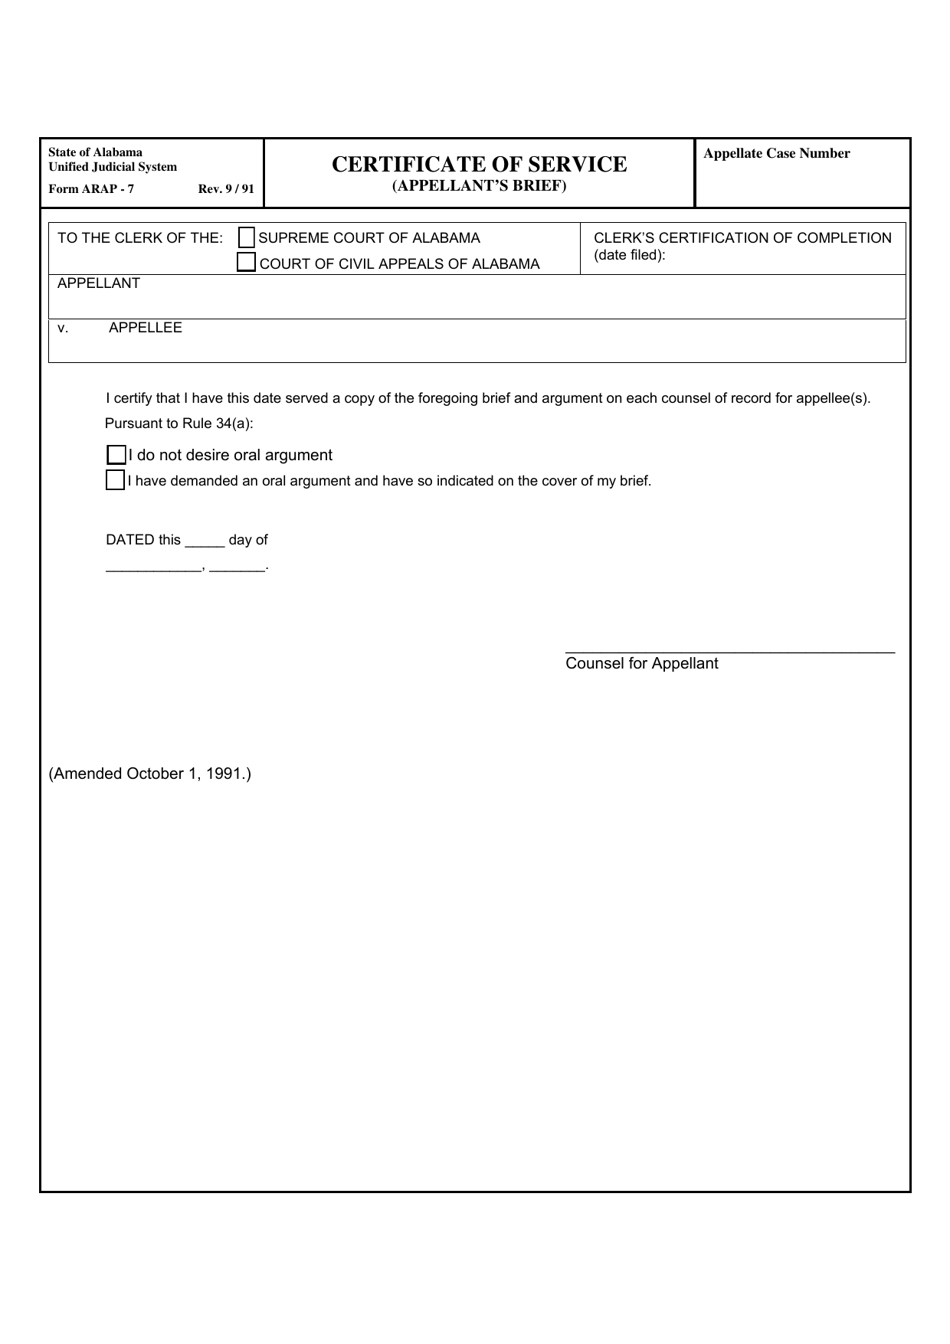 Form ARAP-7 Certificate of Service (Appellants Brief) - Alabama, Page 1